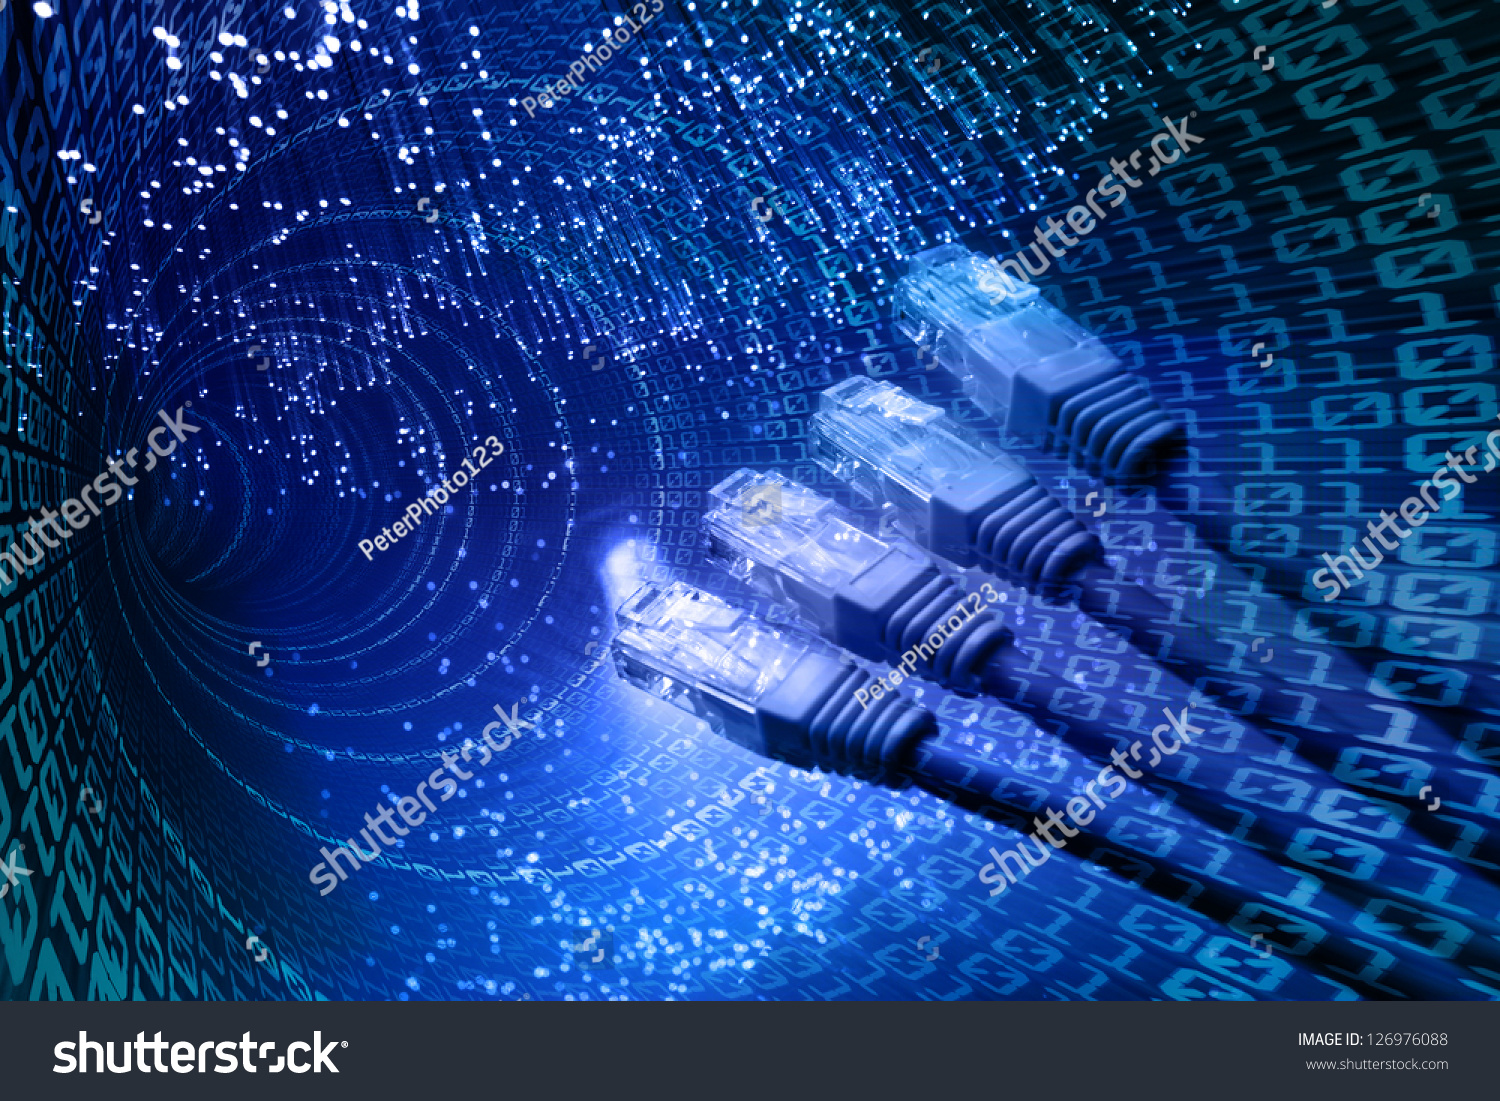 Network cable  binary fiber otics backgound #126976088